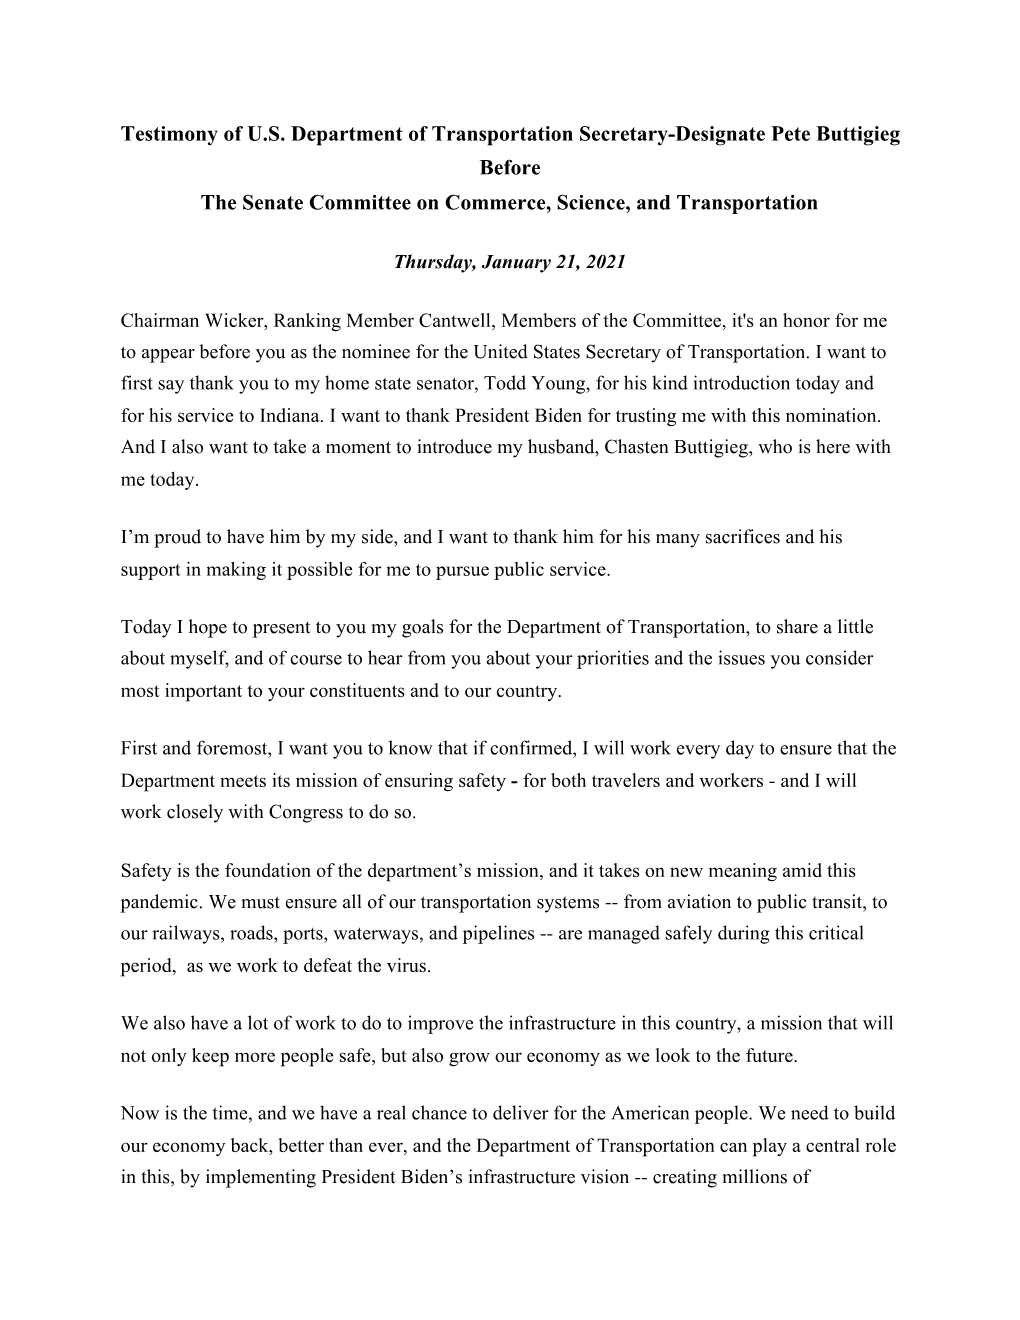 Testimony of U.S. Department of Transportation Secretary-Designate Pete Buttigieg Before the Senate Committee on Commerce, Science, and Transportation